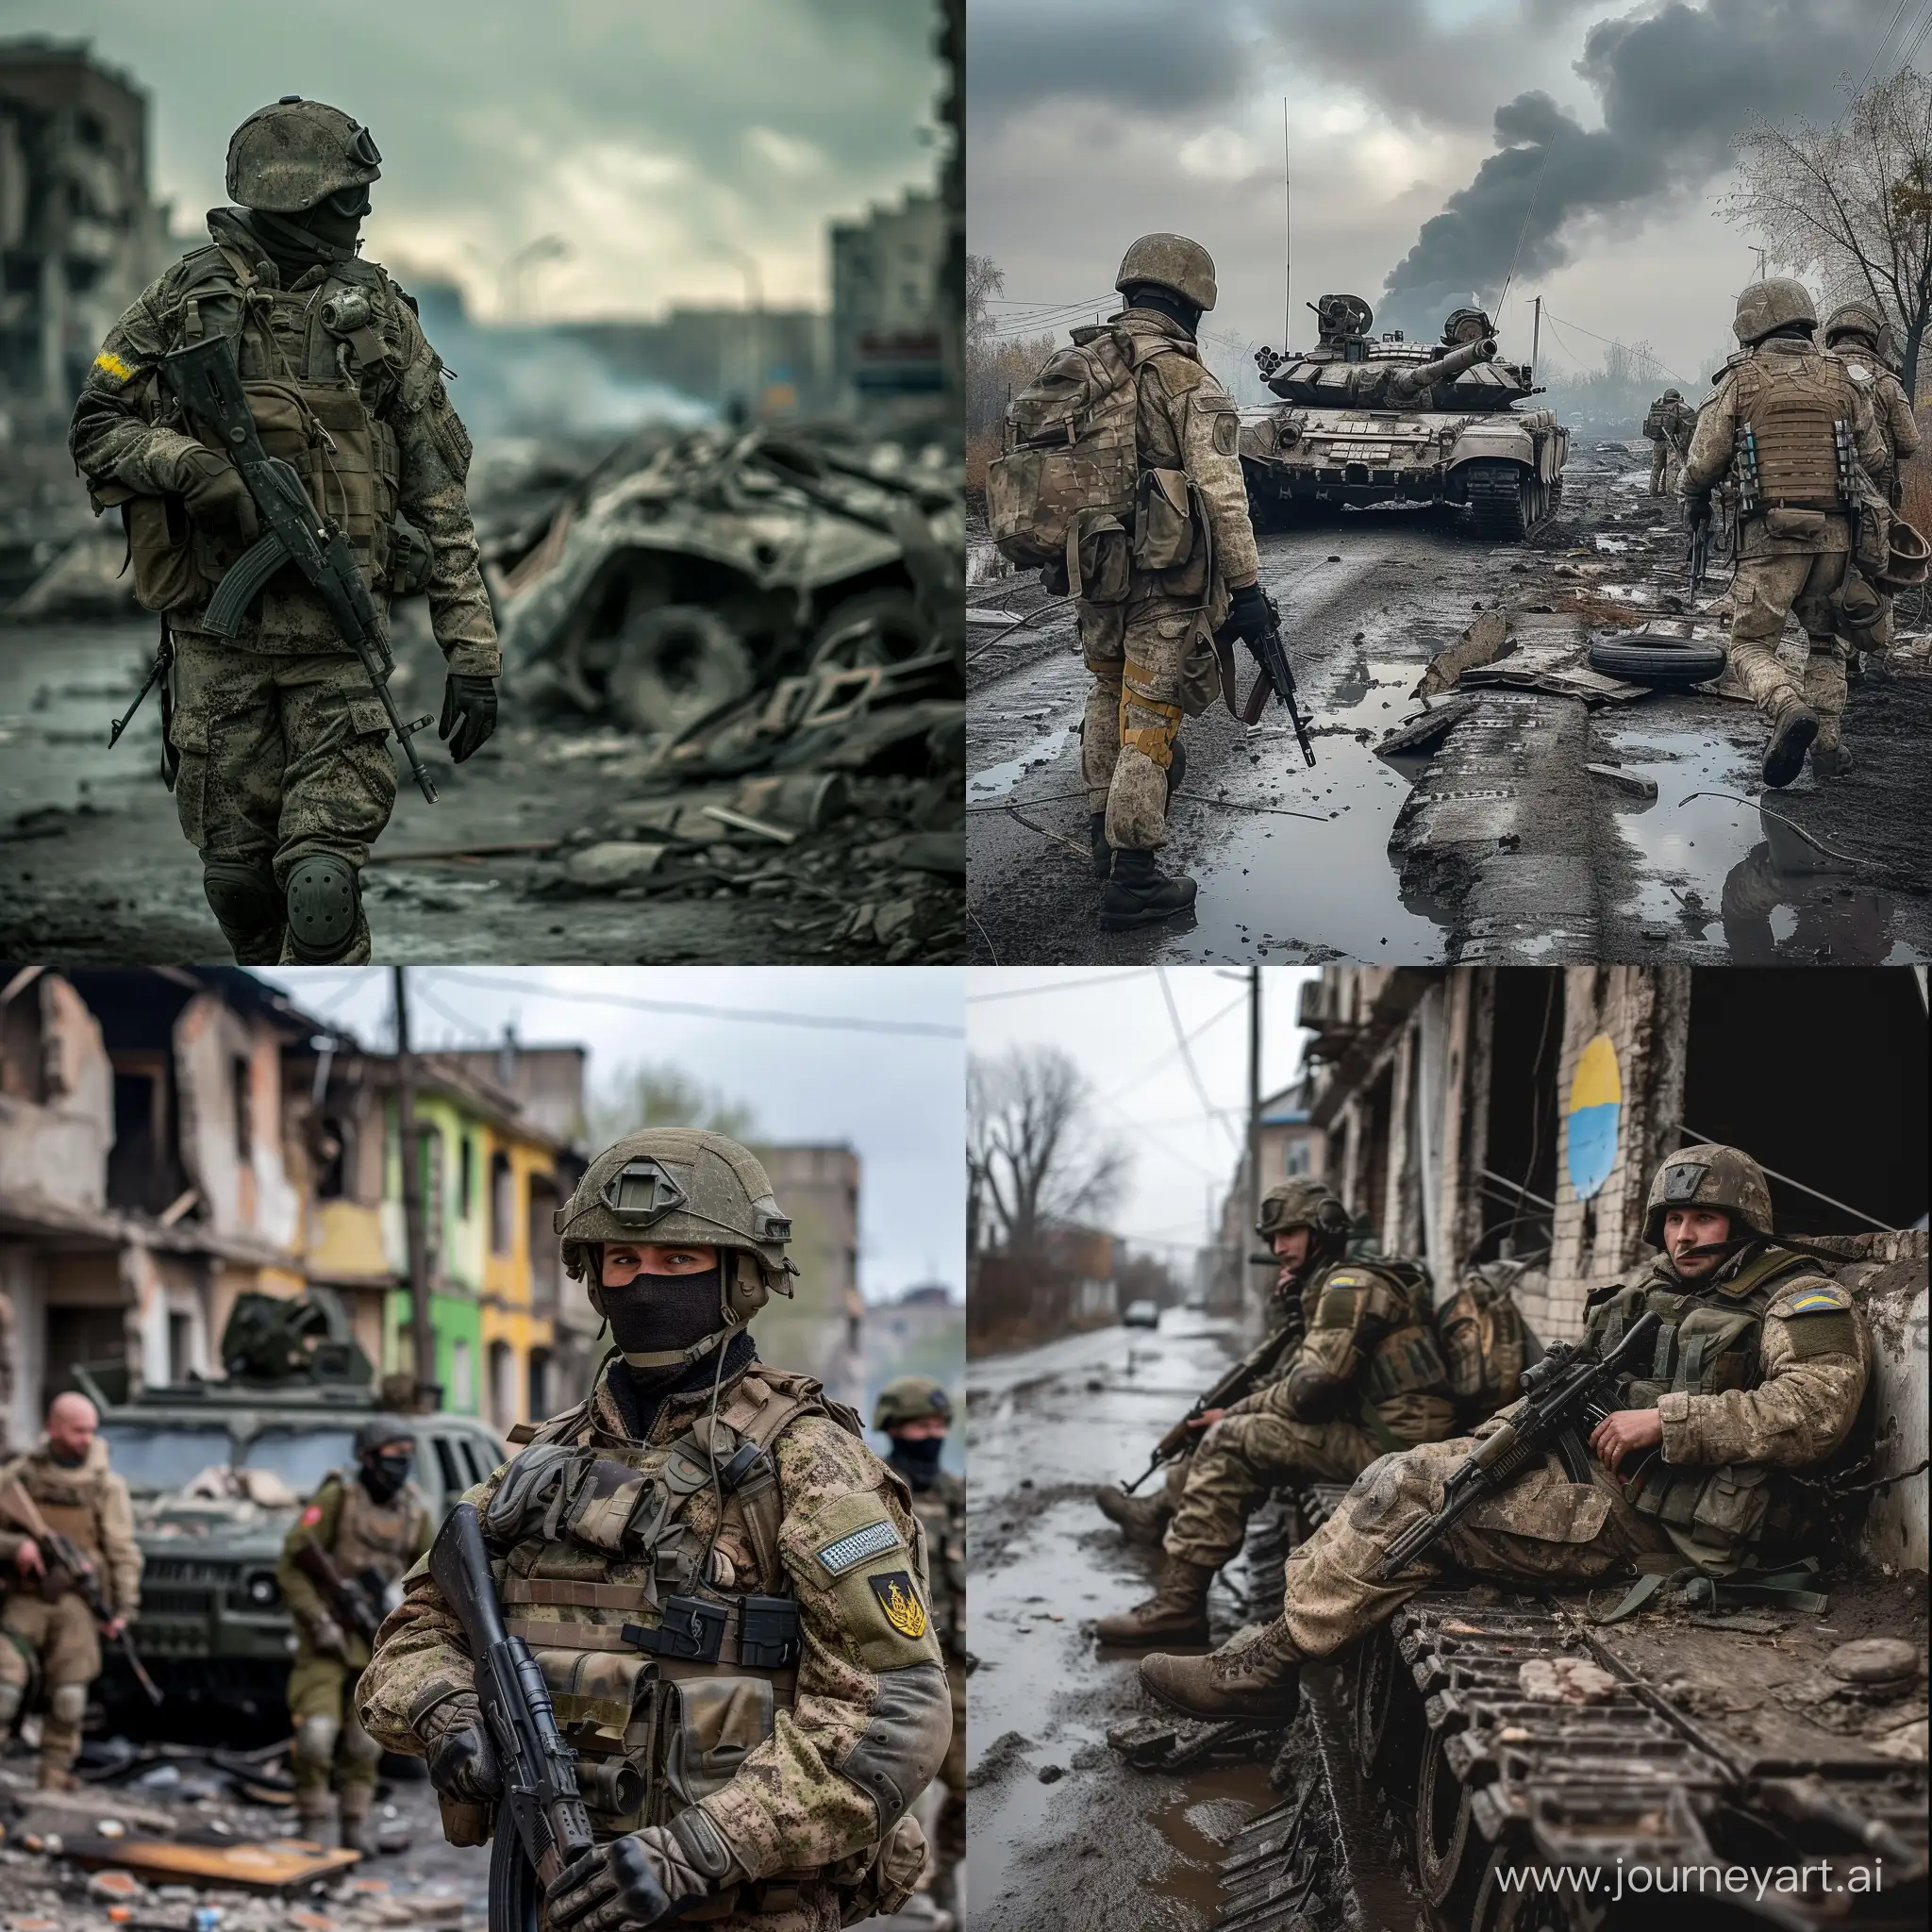 Ukraine-War-Photo-Devastation-and-Resilience-in-11-Aspect-Ratio